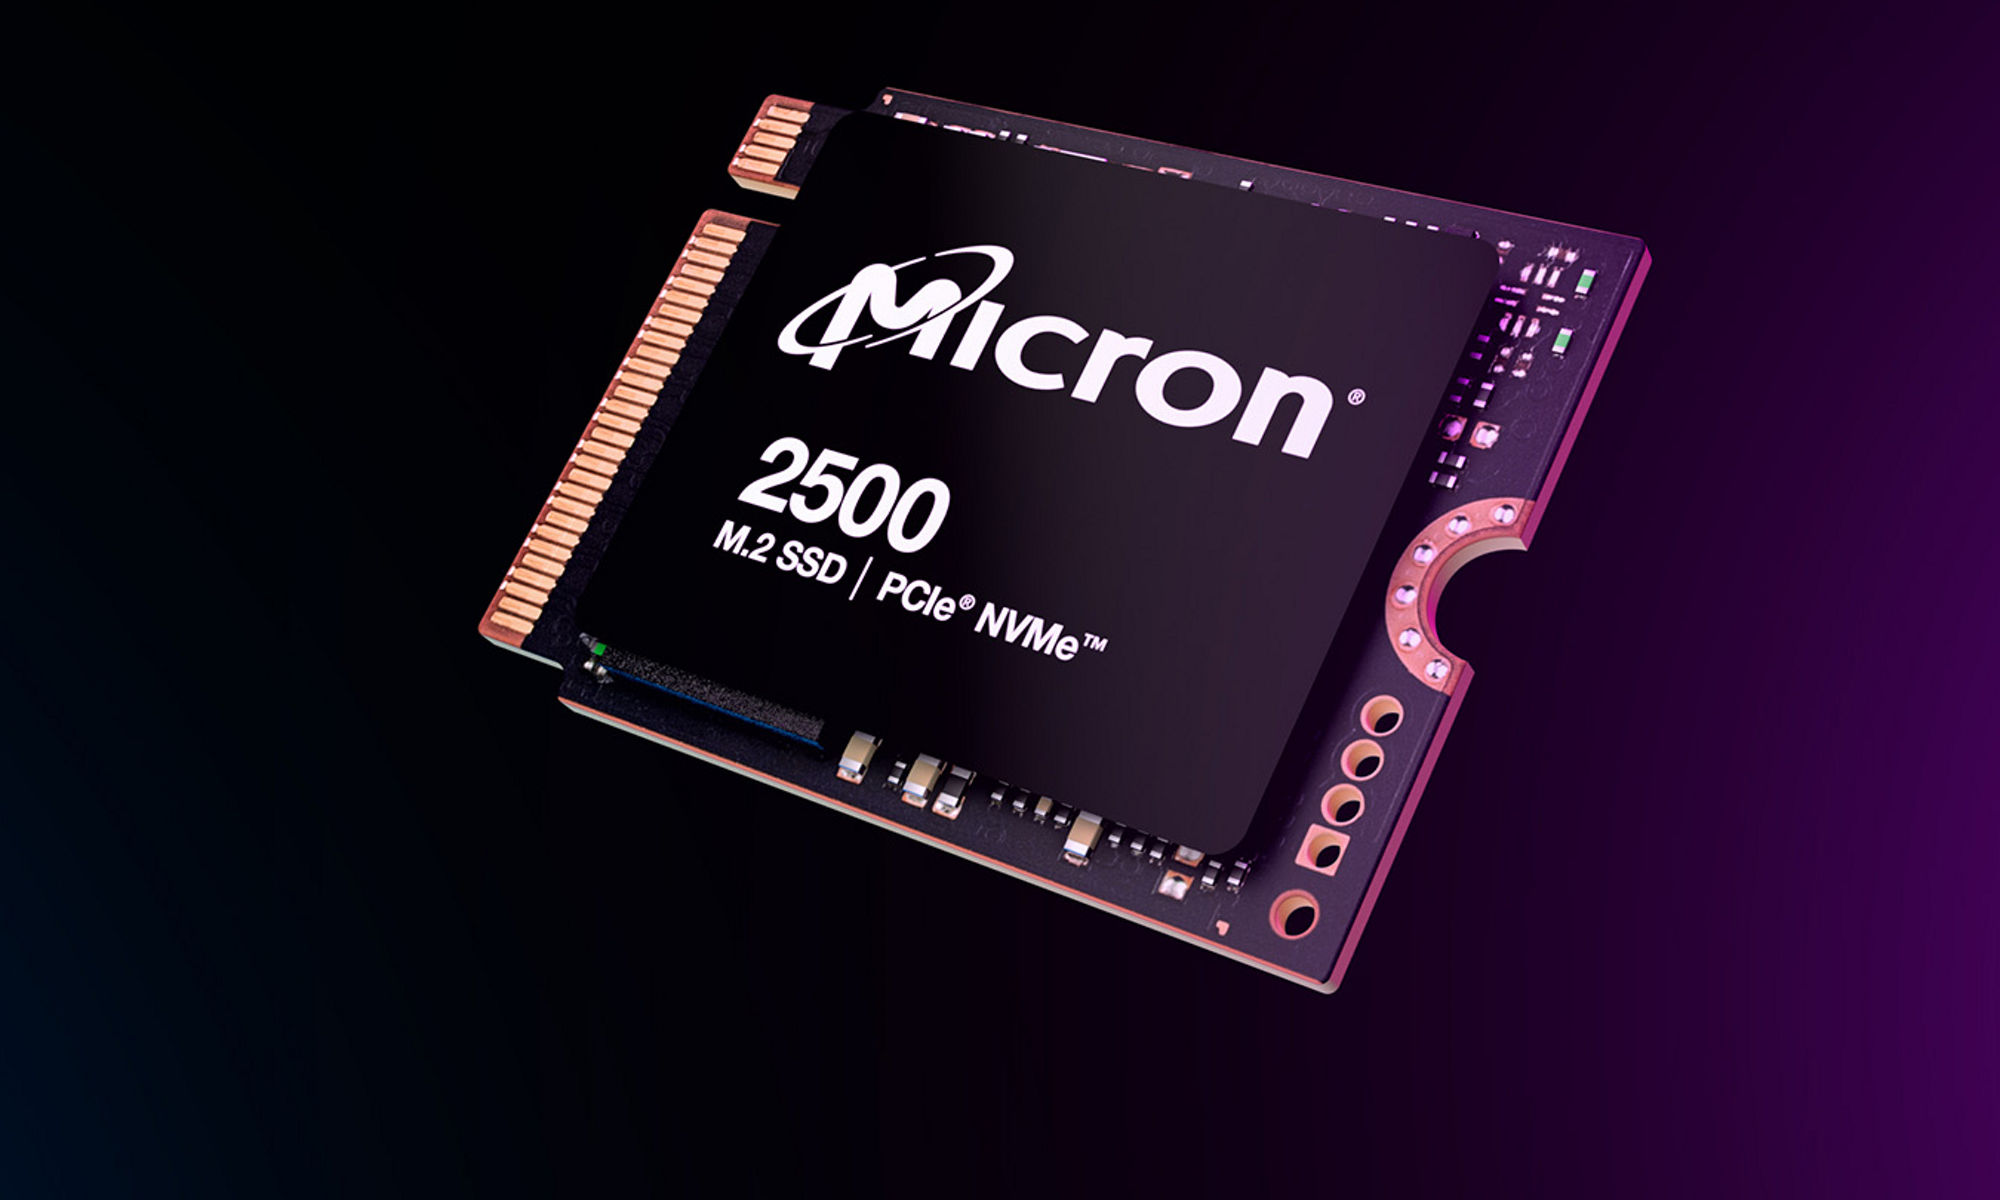 2550 micron chip